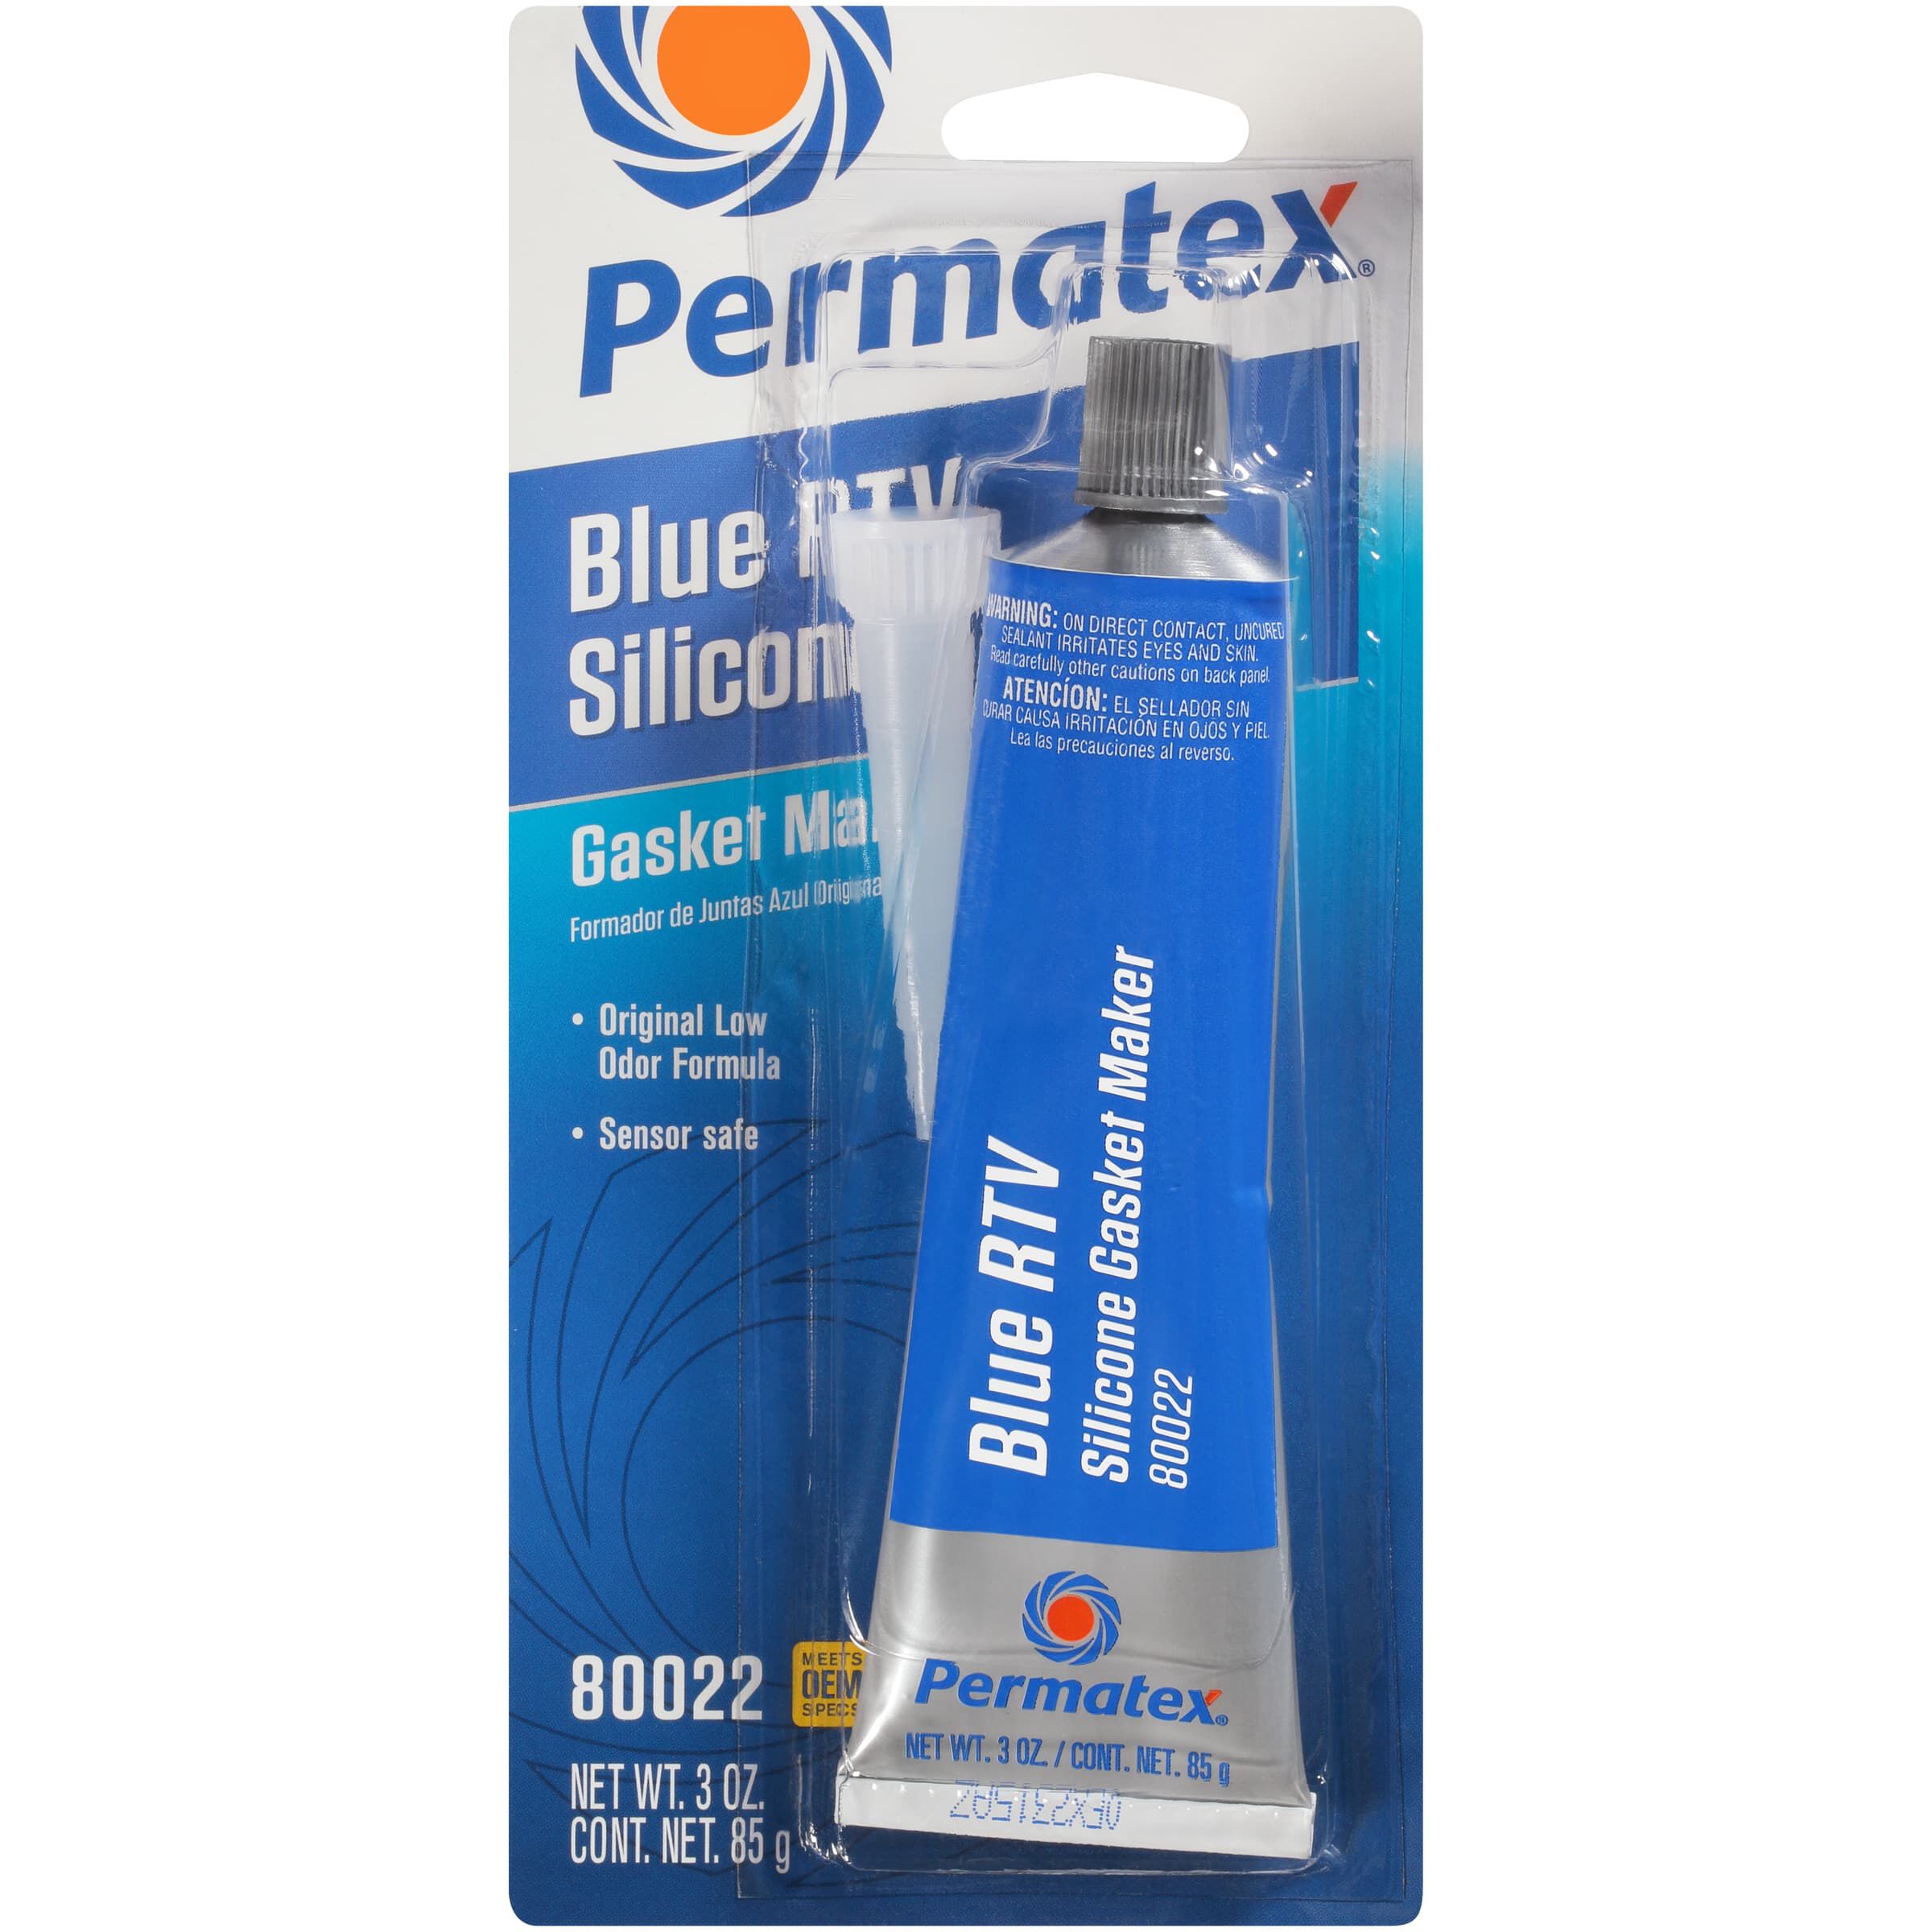 Permatex RTV Silicone Gasket Maker - Blue, 85g